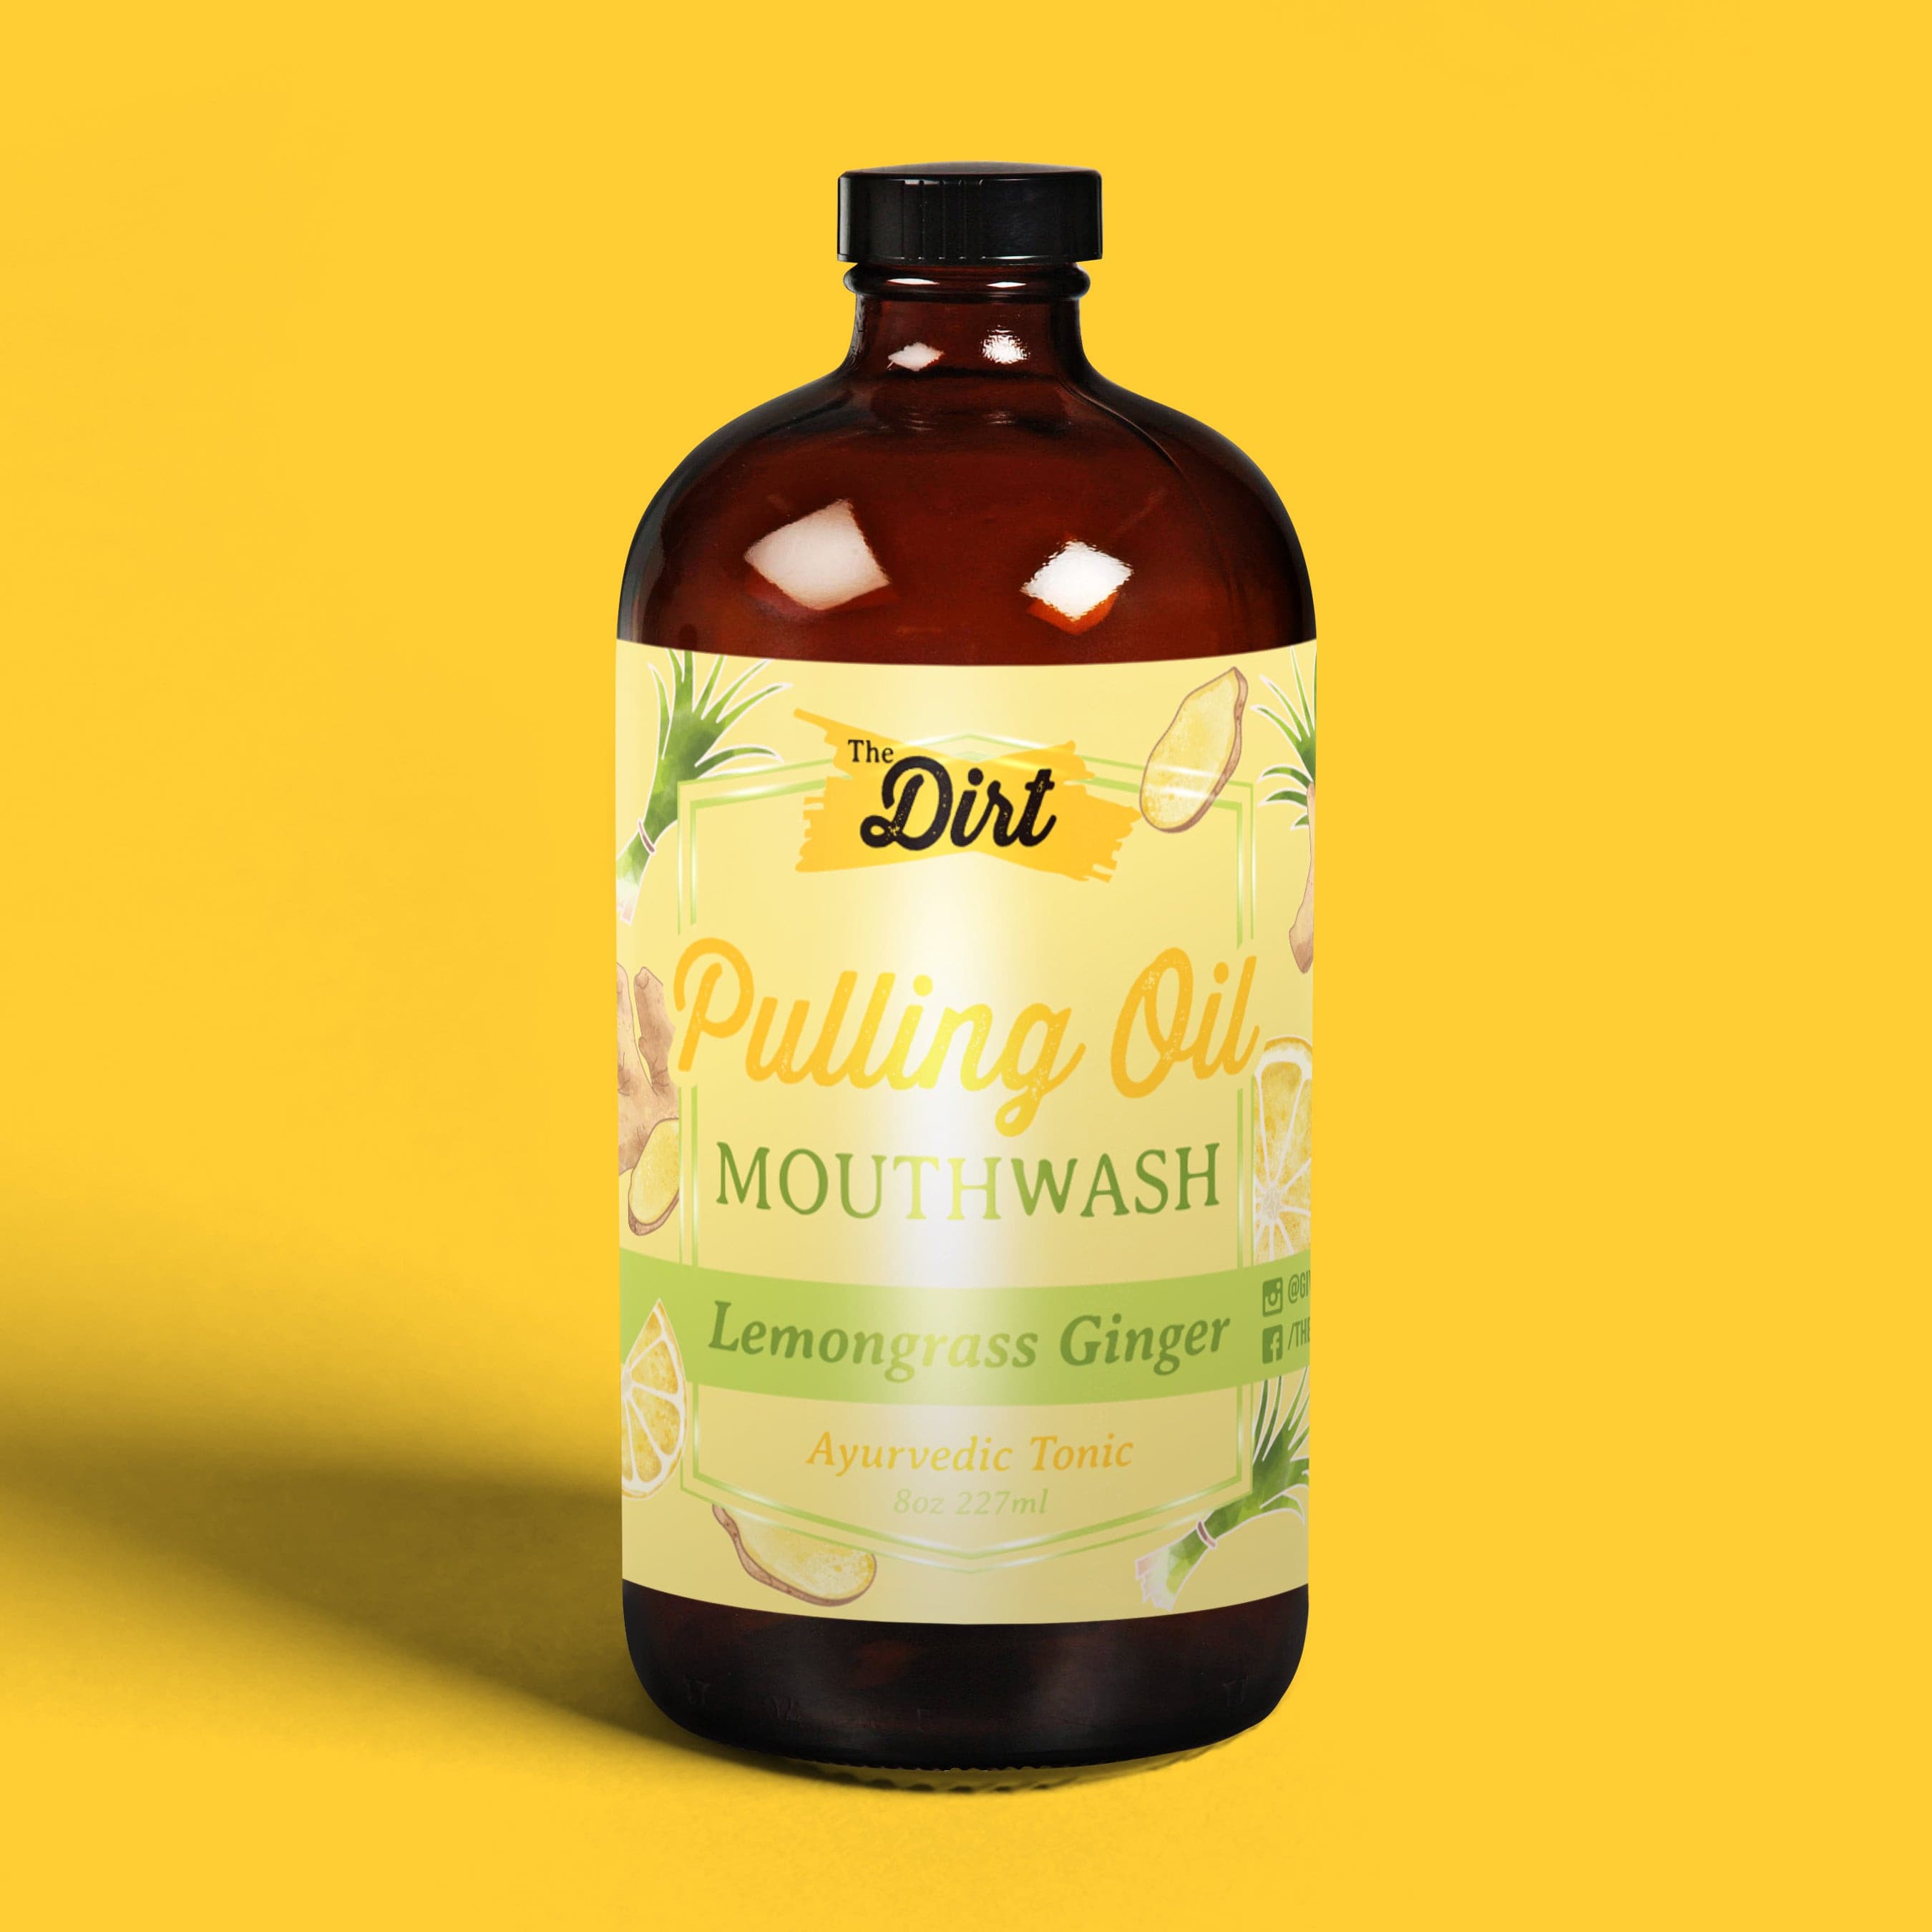 Pulling Oil Mouthwash - The Dirt - Super Natural Oral Care 8oz / Lemongrass Oral Care